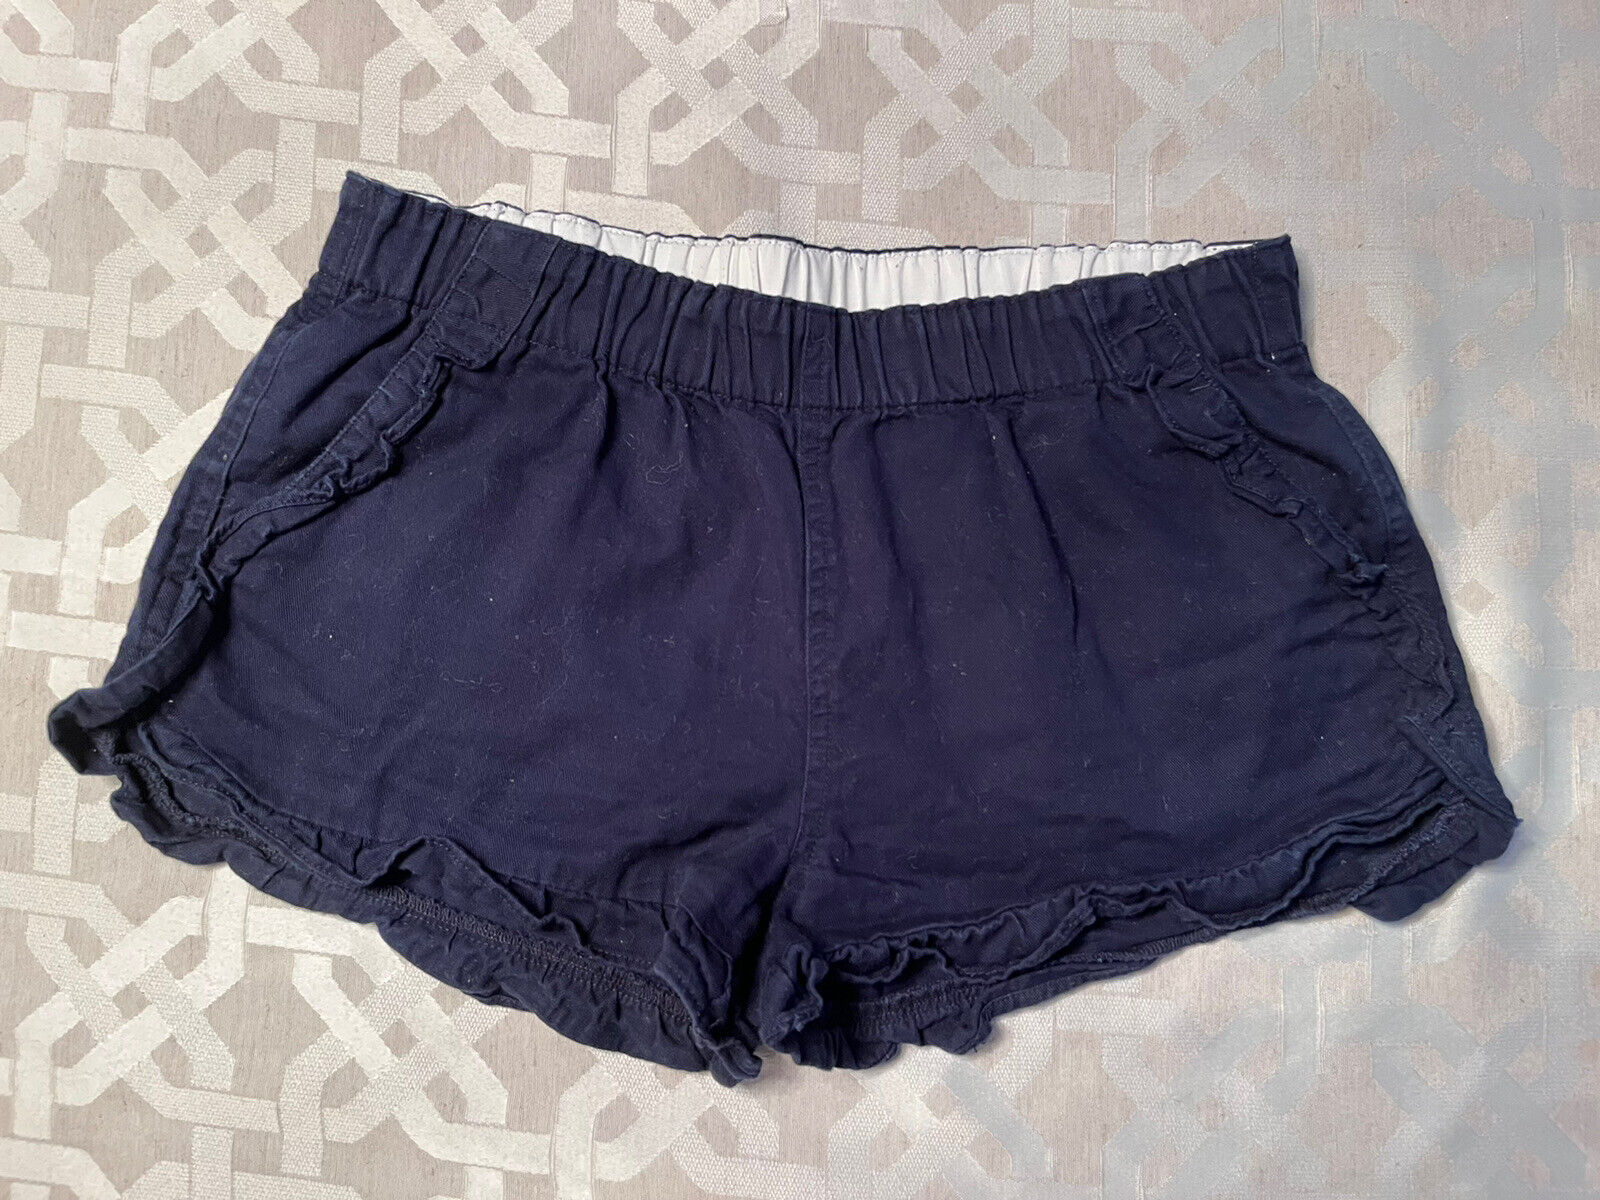 Crewcuts Everyday Girls' Navy Shorts Ruffles (size 14)